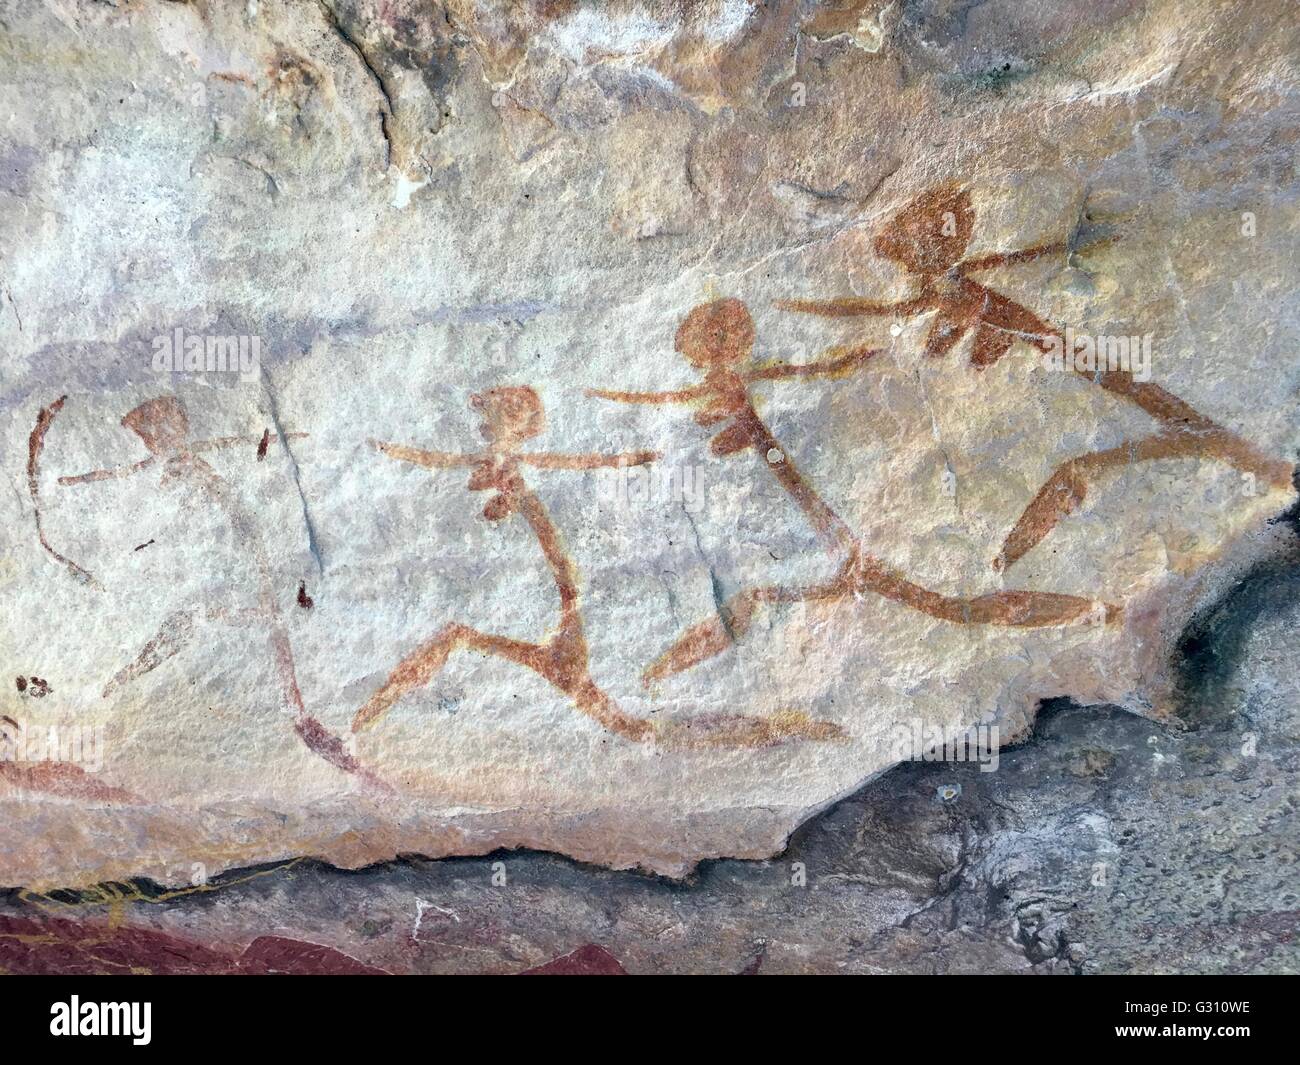 Aboriginal cave paintings of female figures at Injalak Hill at Gunbalanya (Oenpelli) in West Arnhem Land, Australia Stock Photo